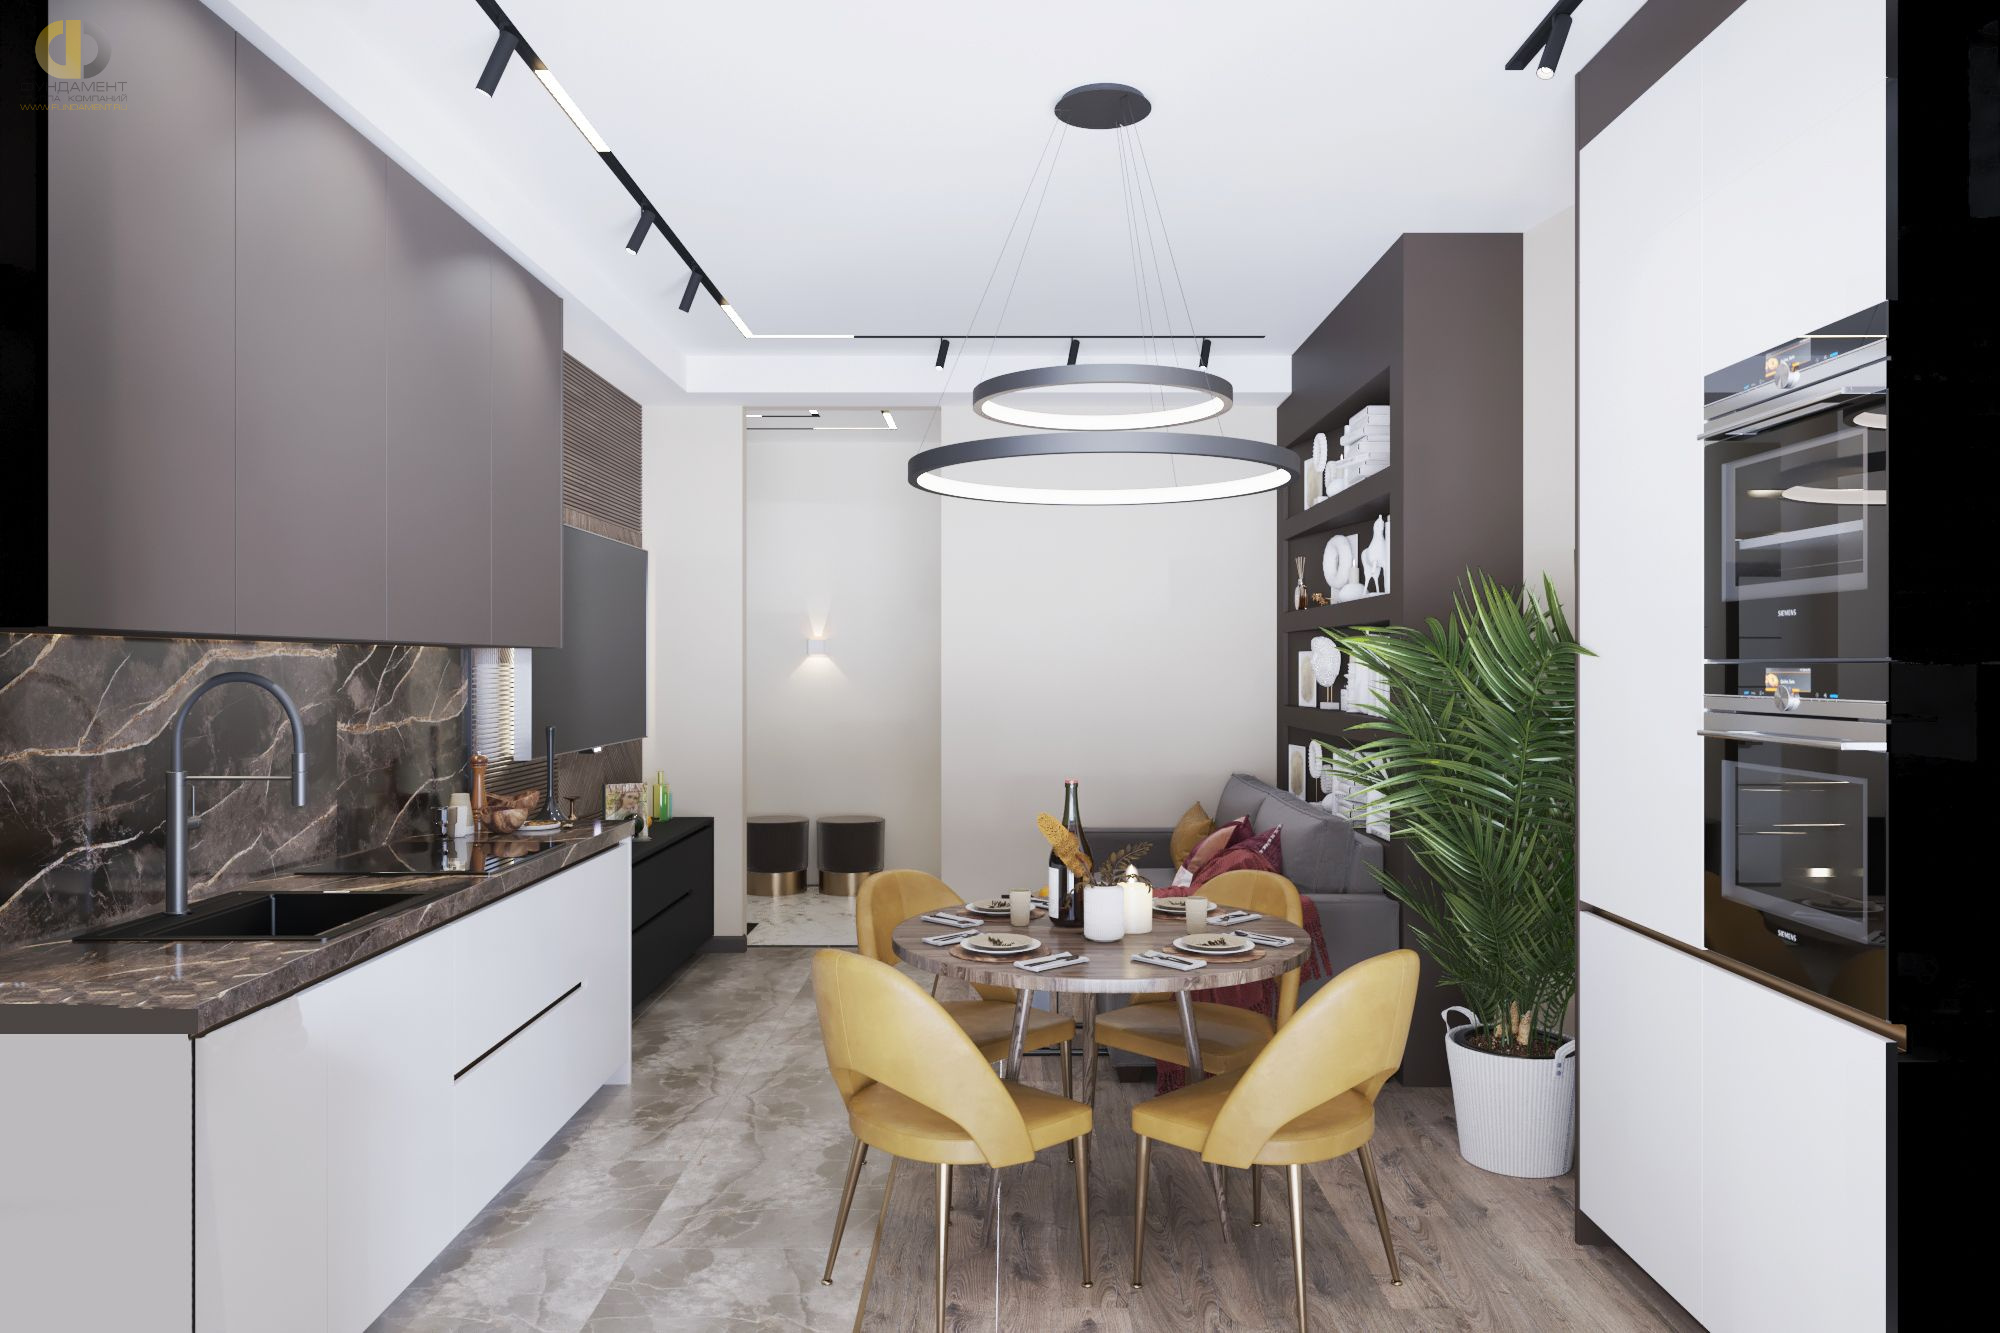 Дизайн кухни в светло-сером цвете - фото